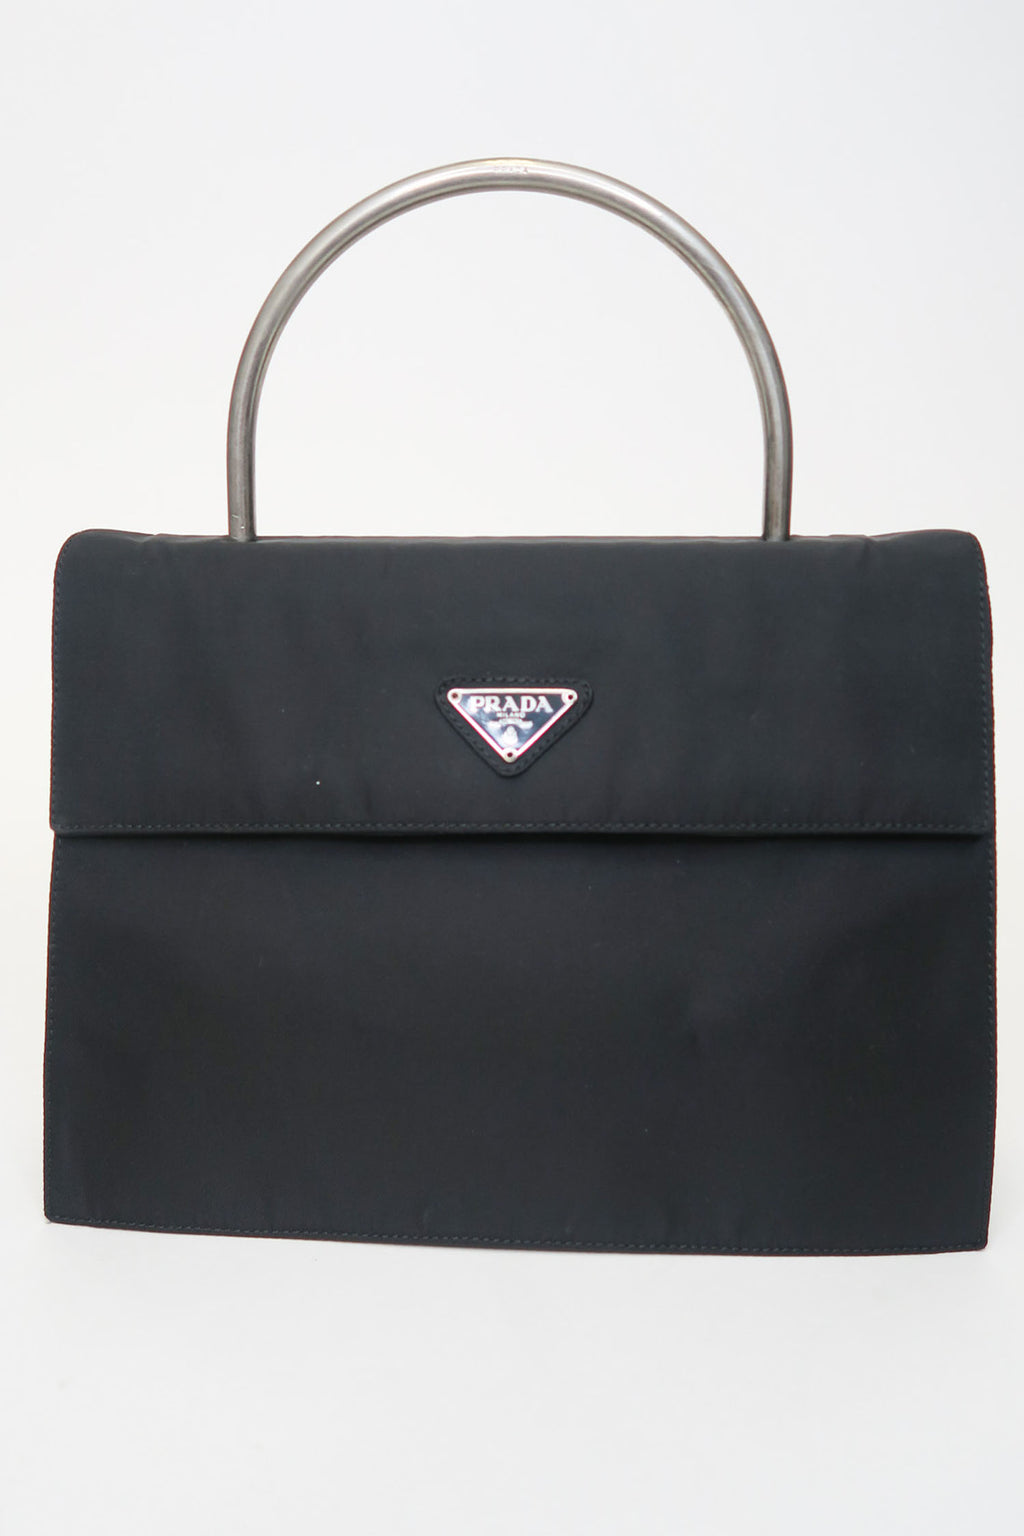 Prada Italy. Vintage Logo Beige Leather Chain Tote Shoulderbag/Handbag |  PILGRIM NEW YORK